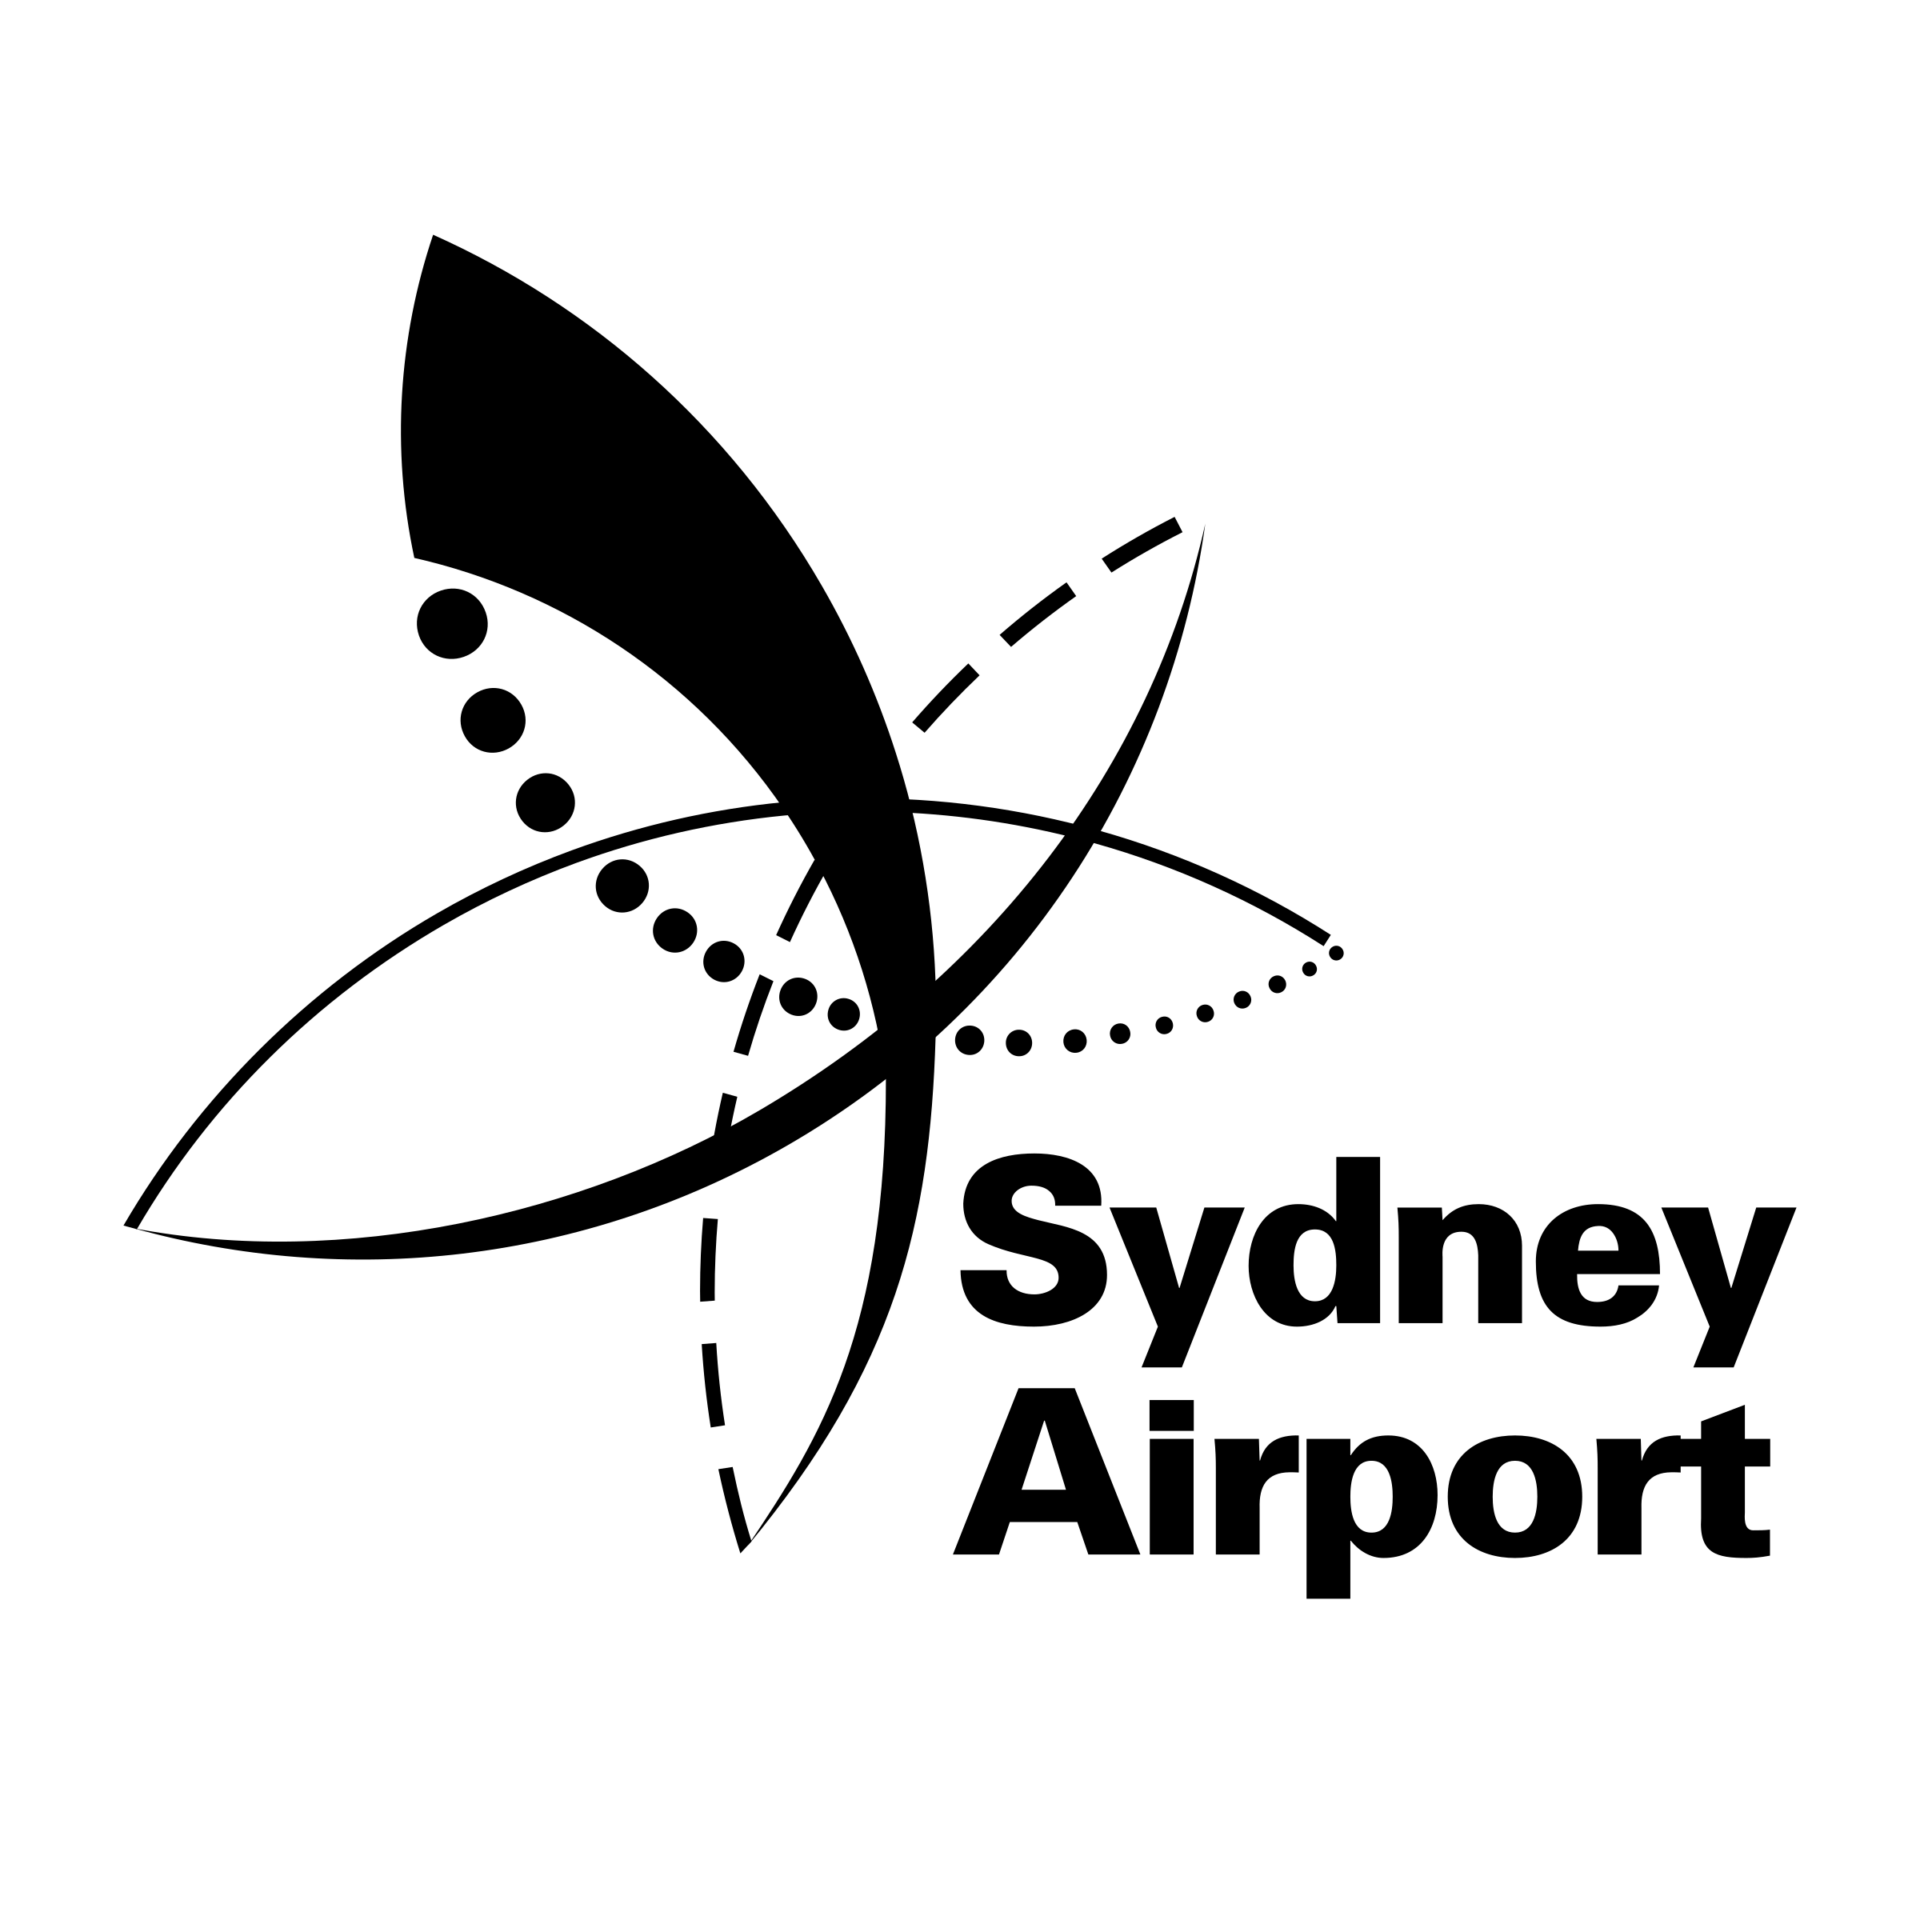 sydney-airport-4-logo